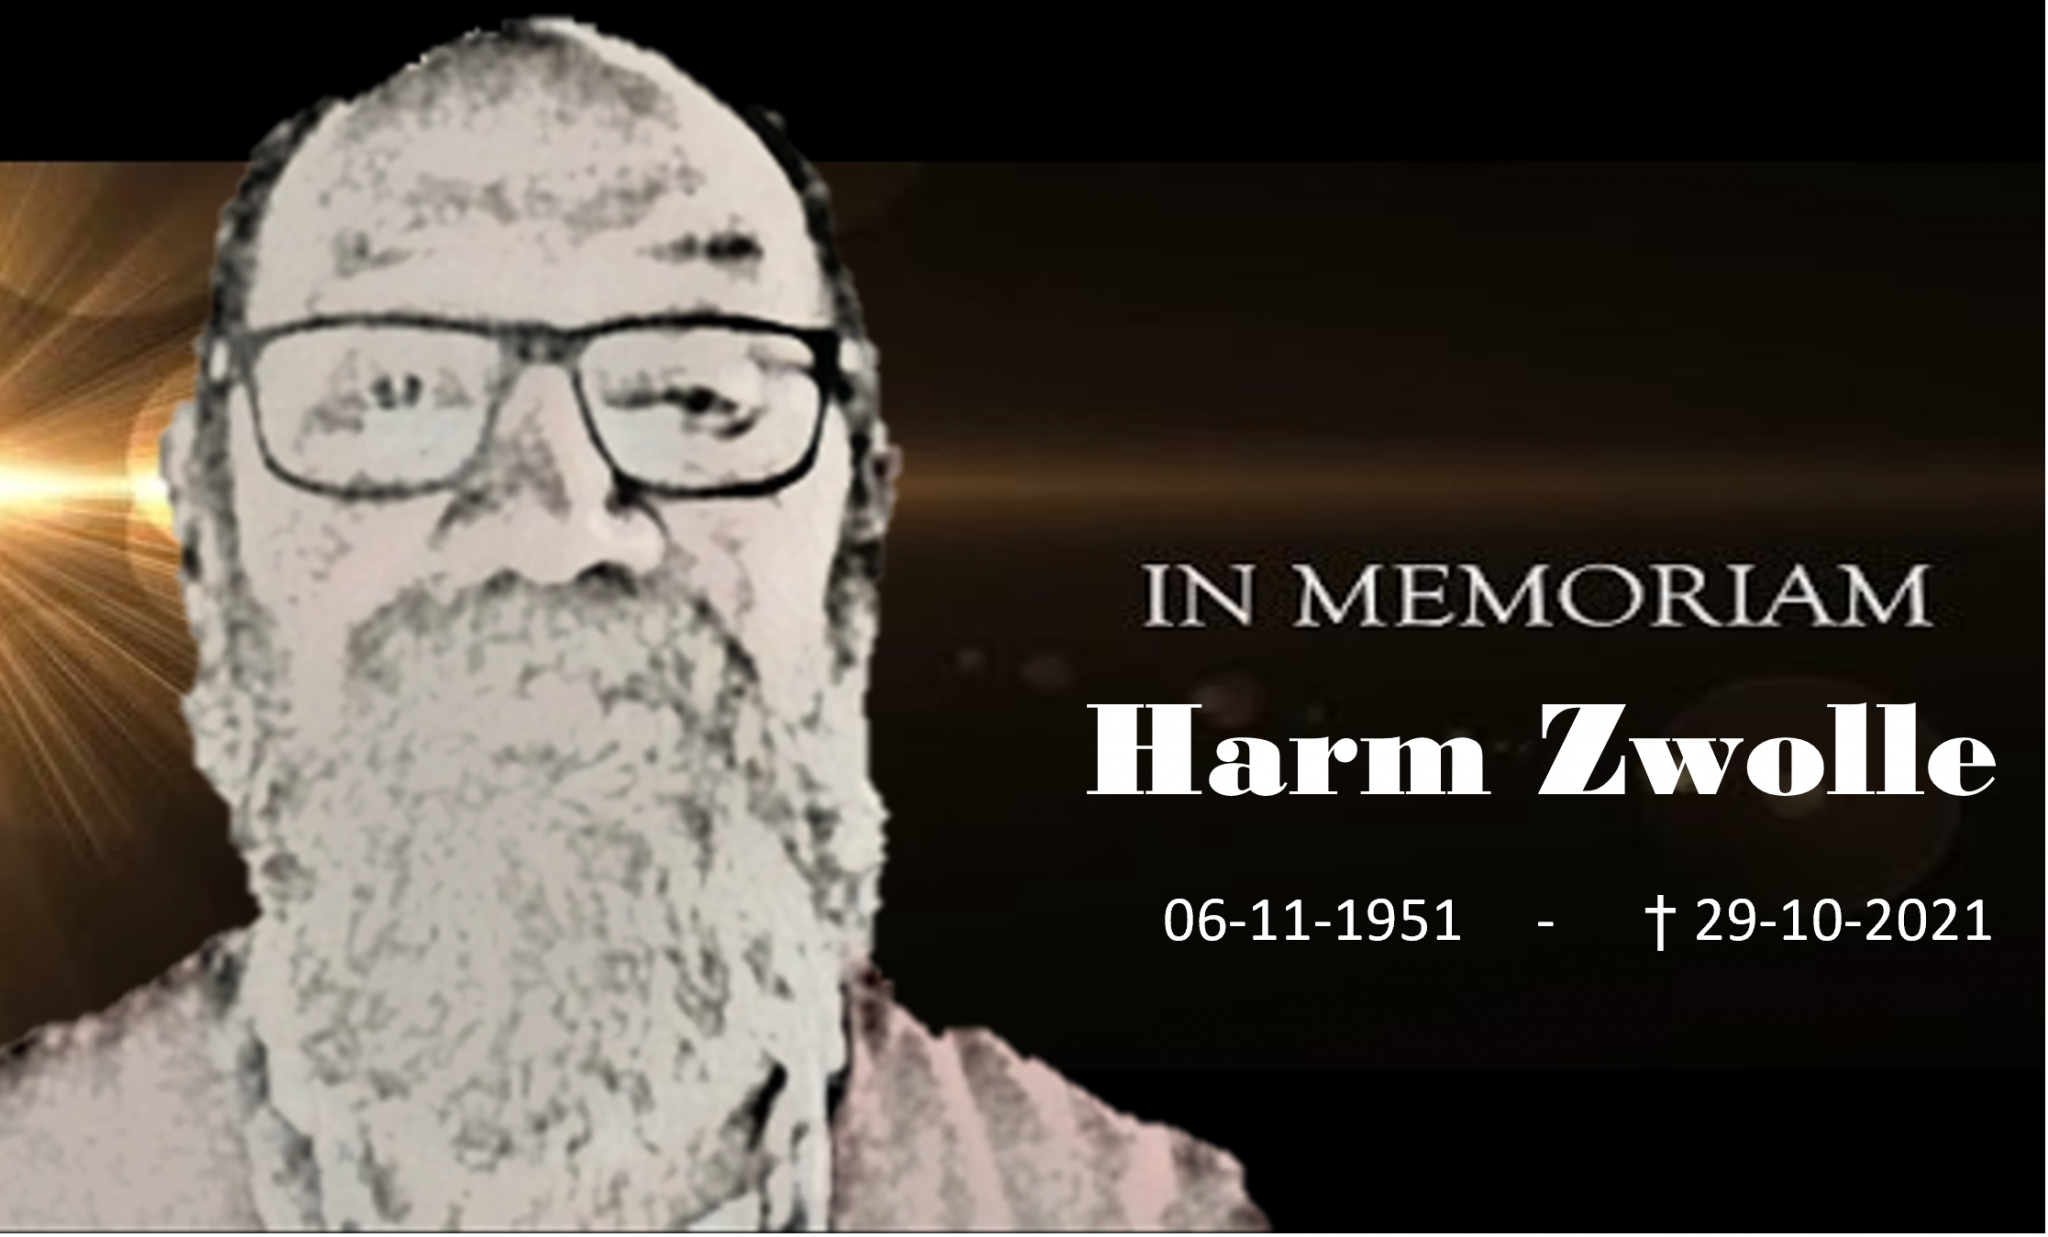 In memoriam - Harm Zwolle